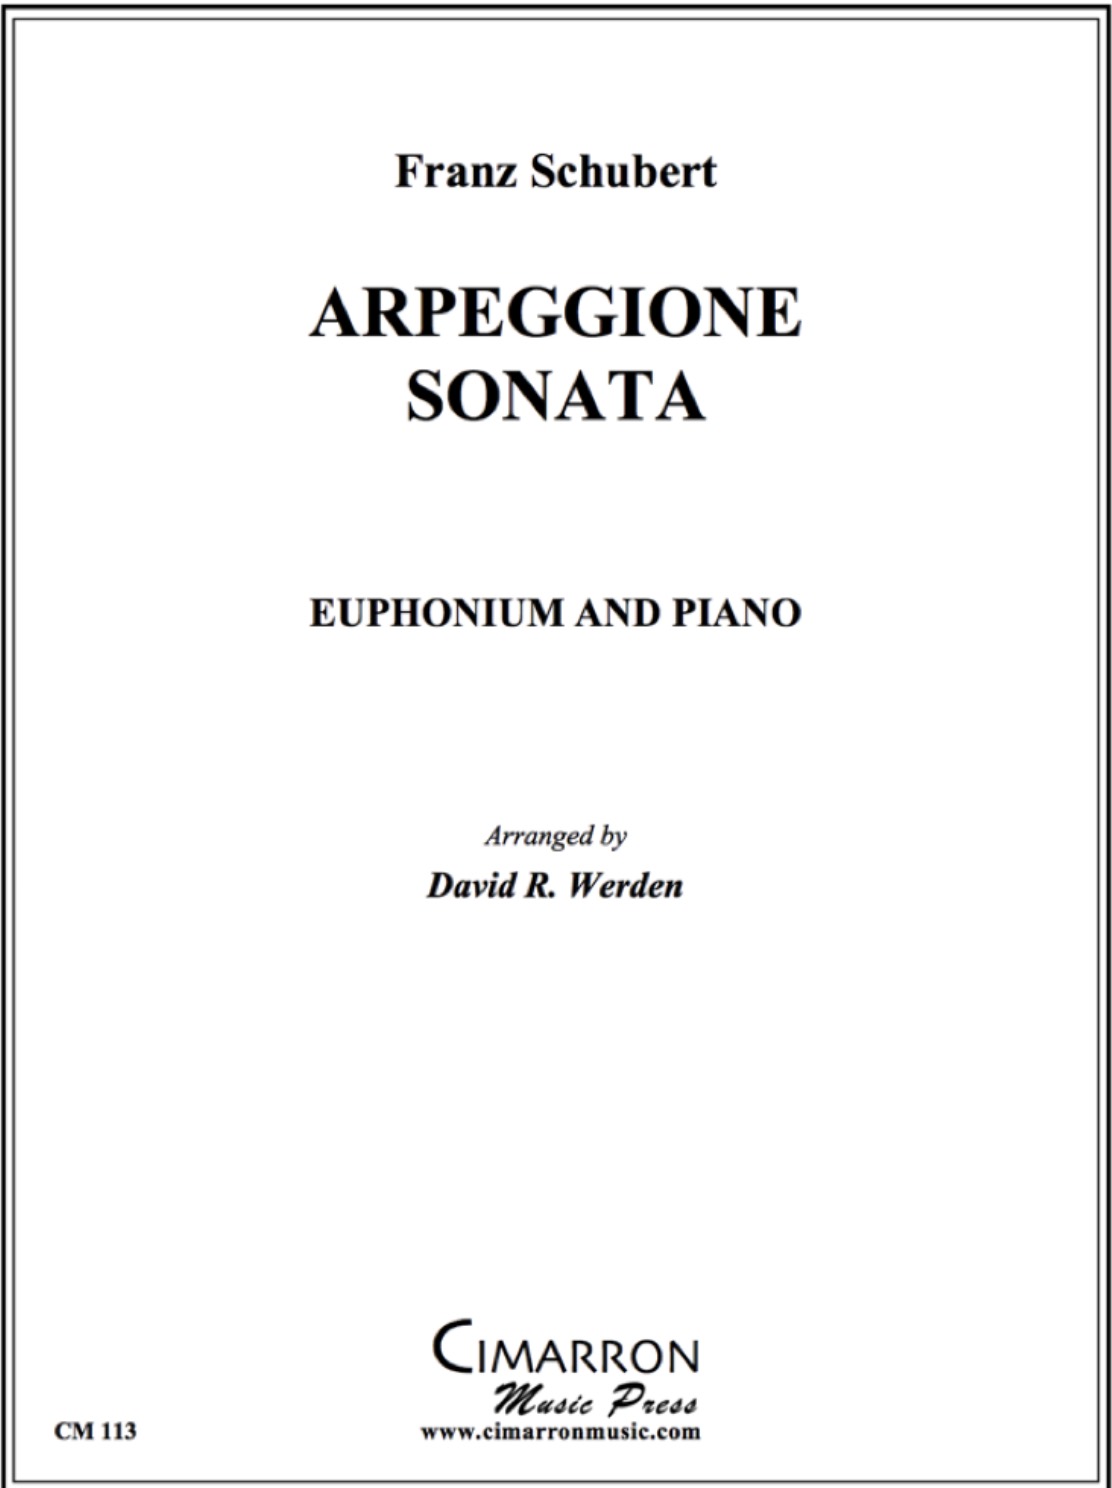 Arpeggione Sonata - Franz Schubert Arr. David R. Werden - Euphonium and Piano